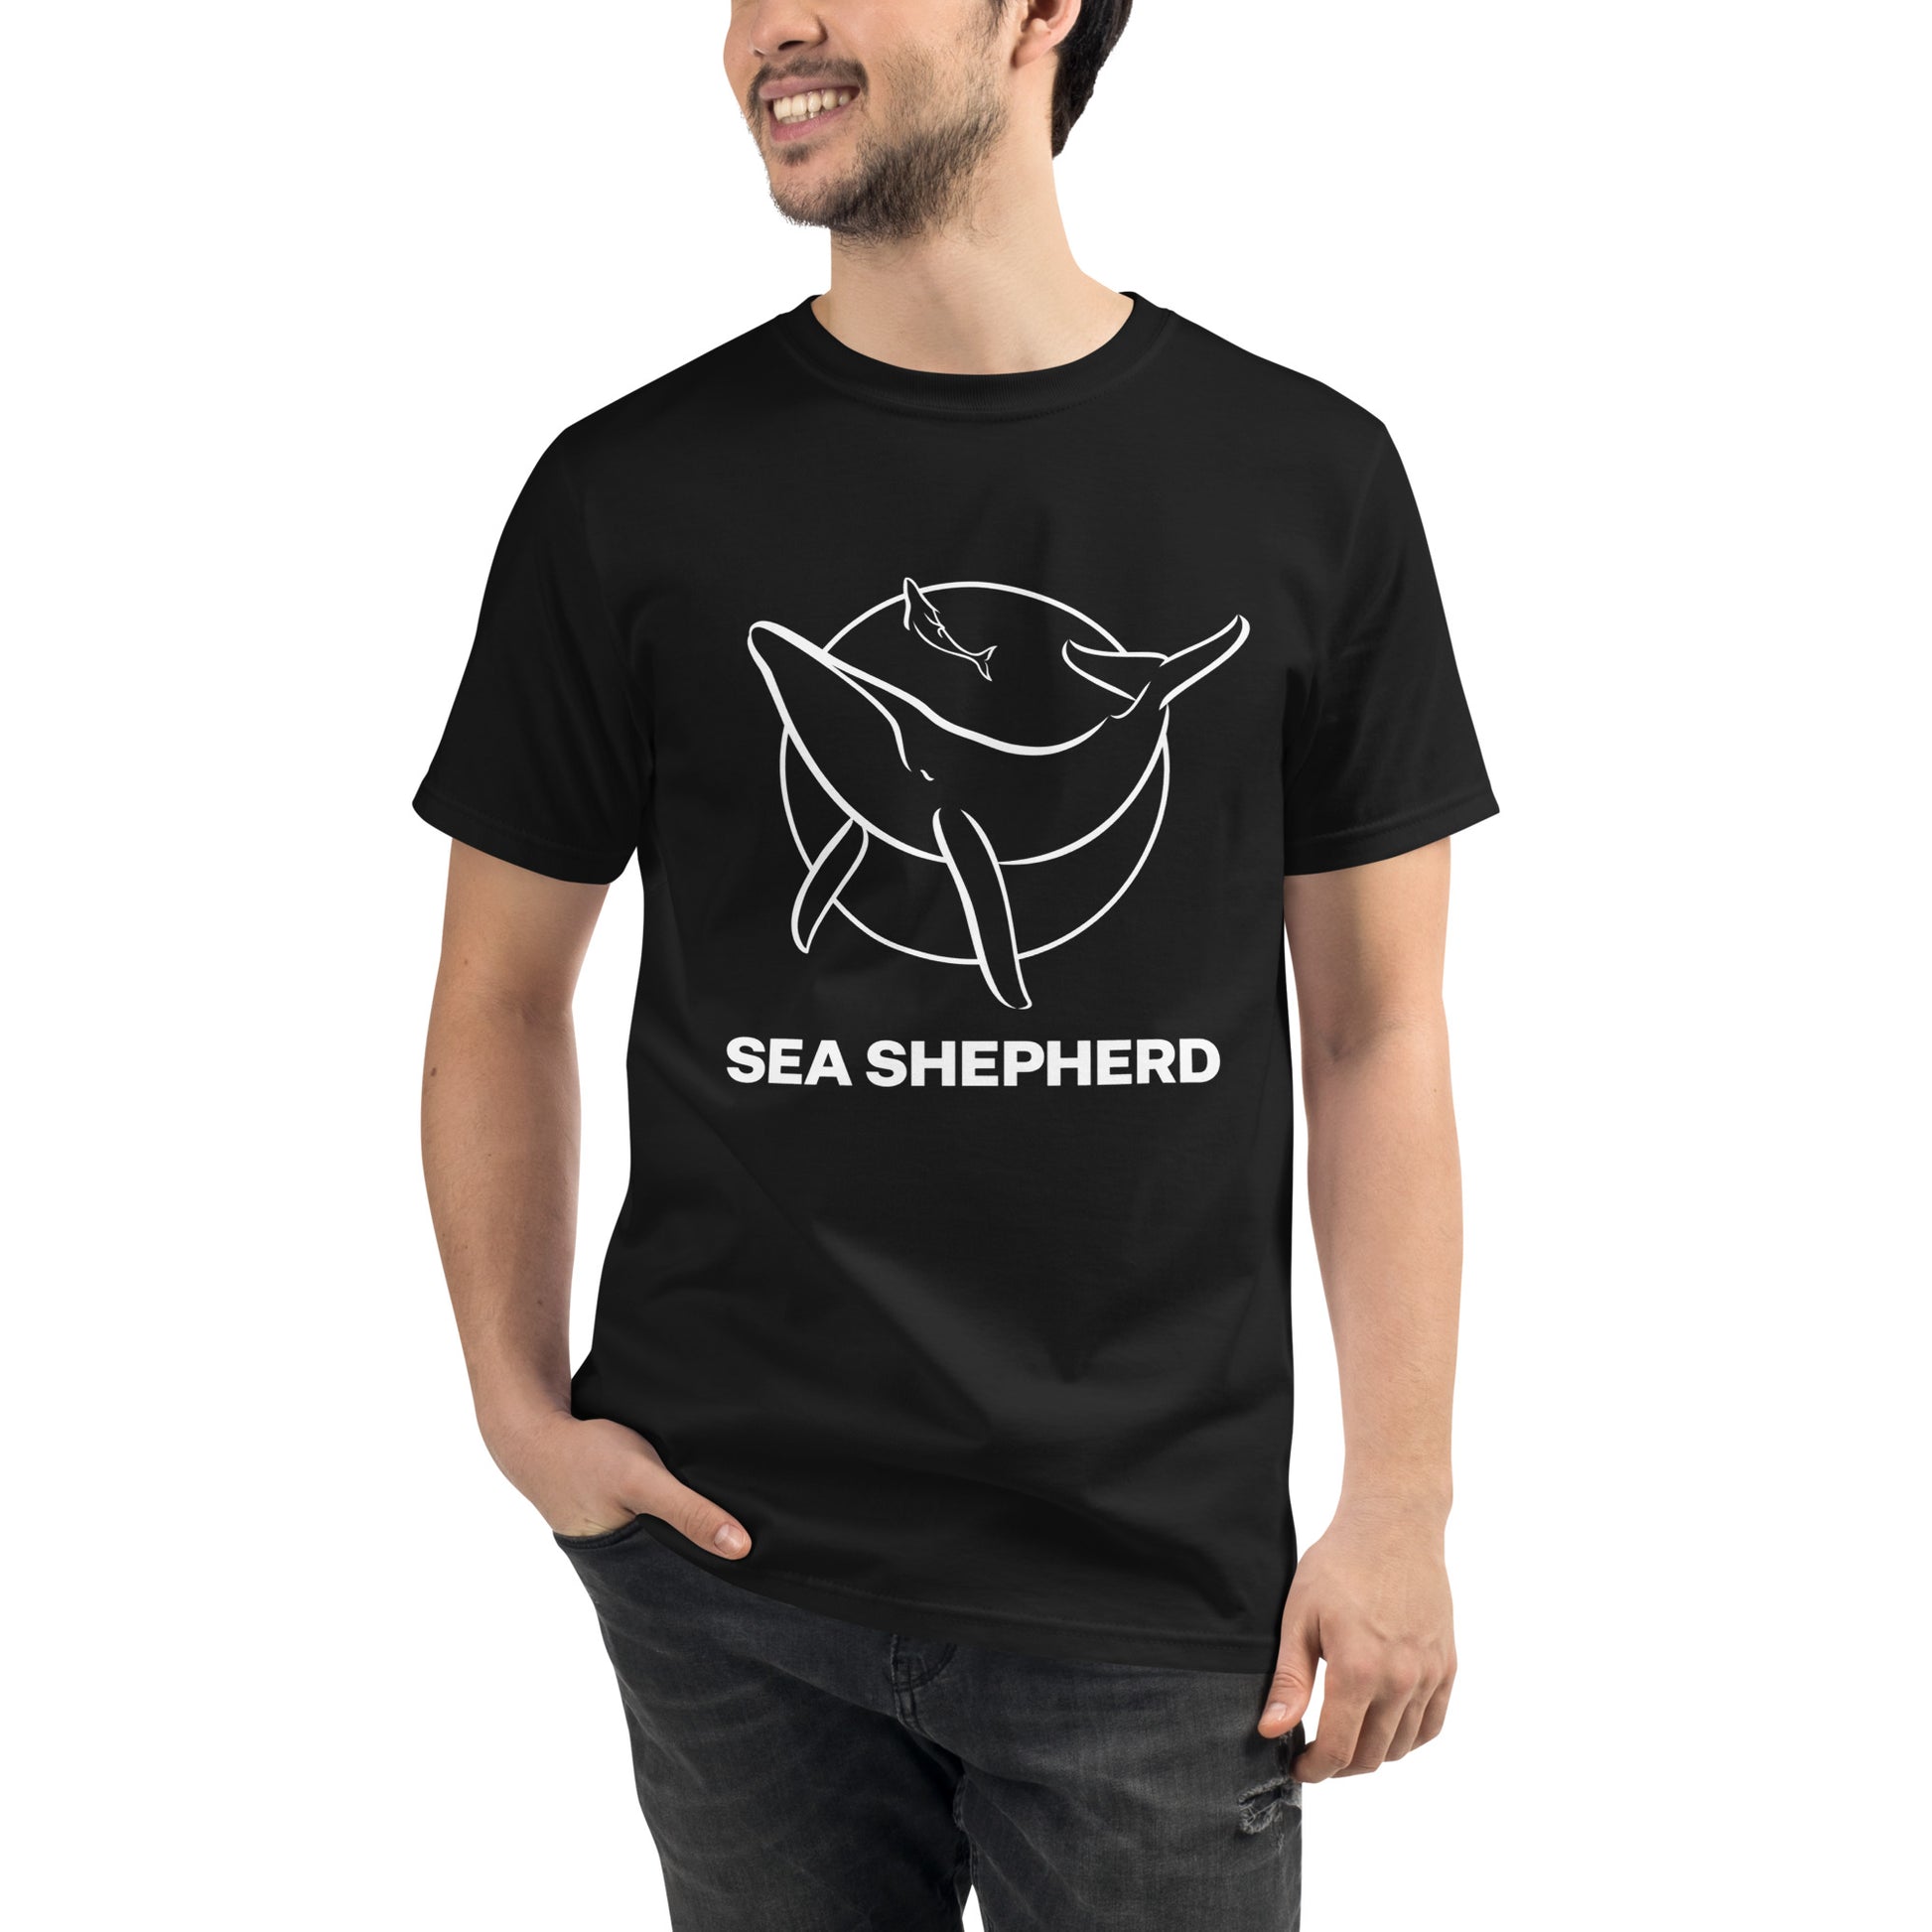 Alaskan Thunderod Fishing Adventures Crew Essential T-Shirt for